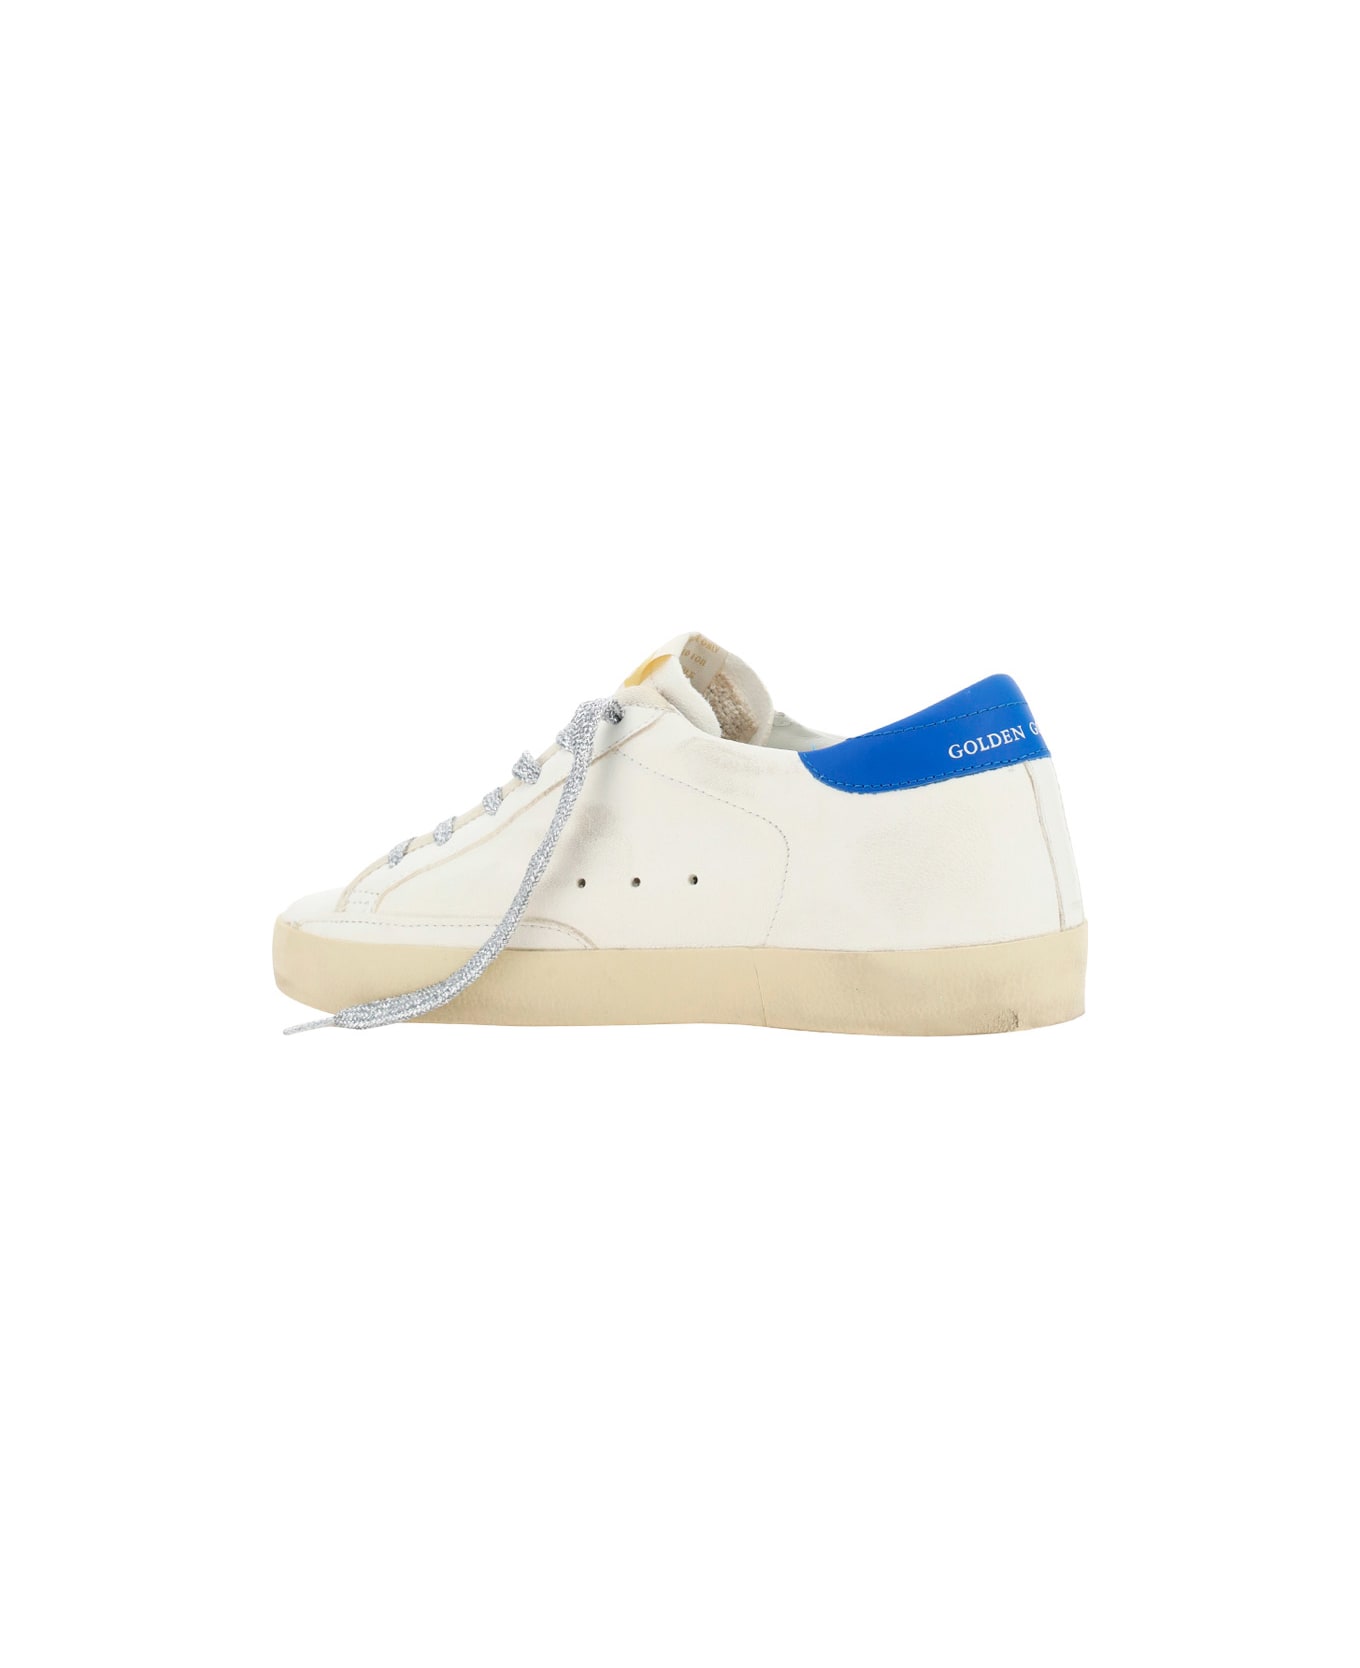 Golden Goose Super Star Sneakers - Cream/silver/blue